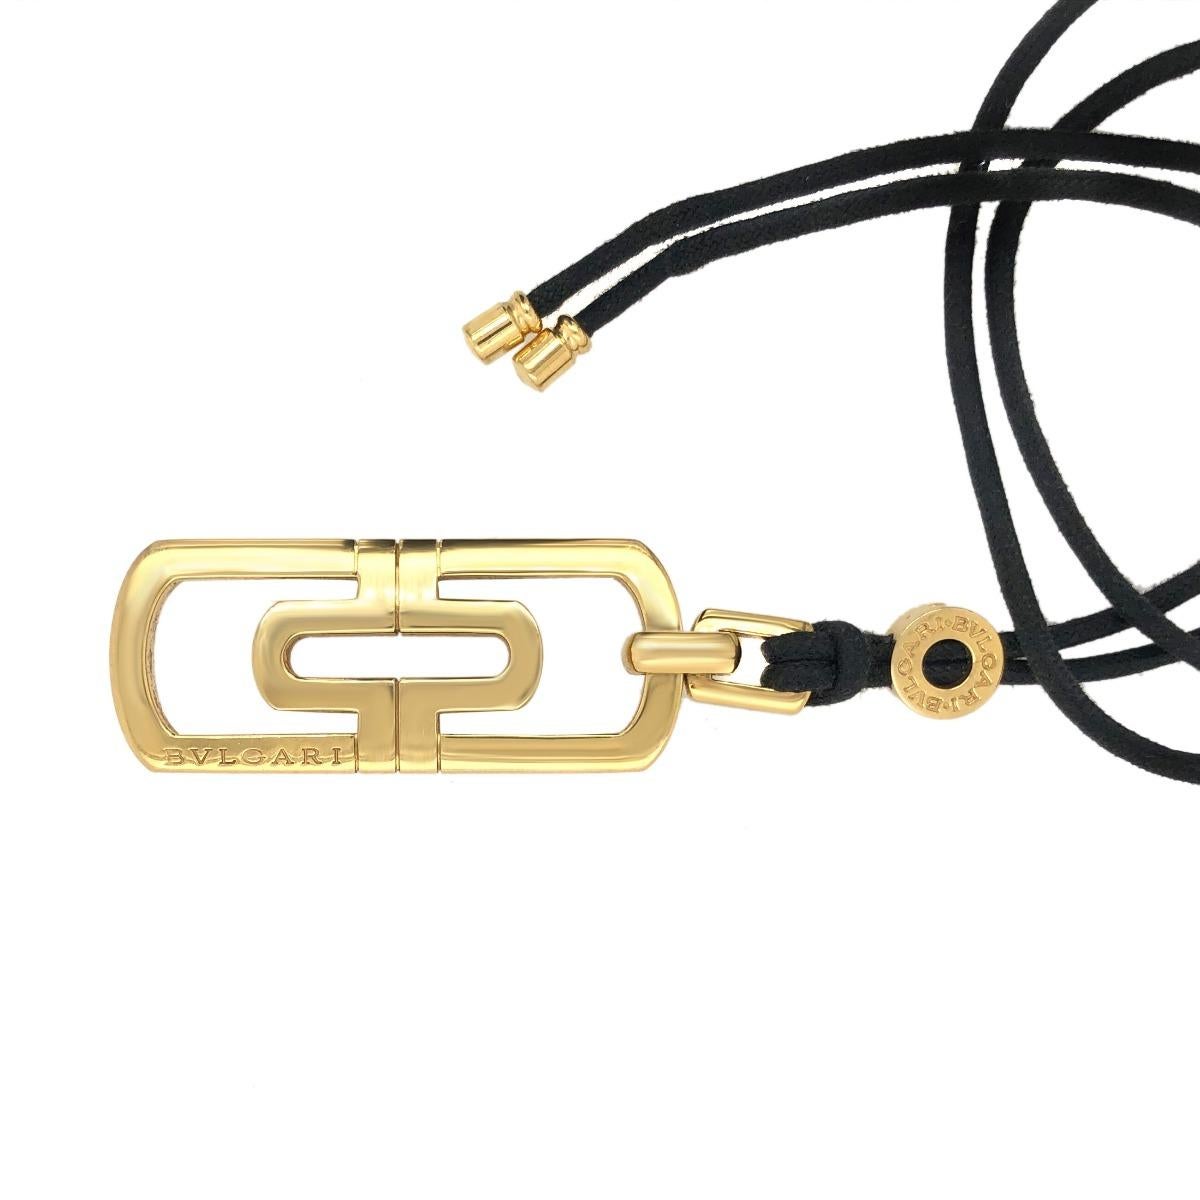 Modern Bvlgari 18 Karat Yellow Gold Pendant with Original Black Cord Necklace